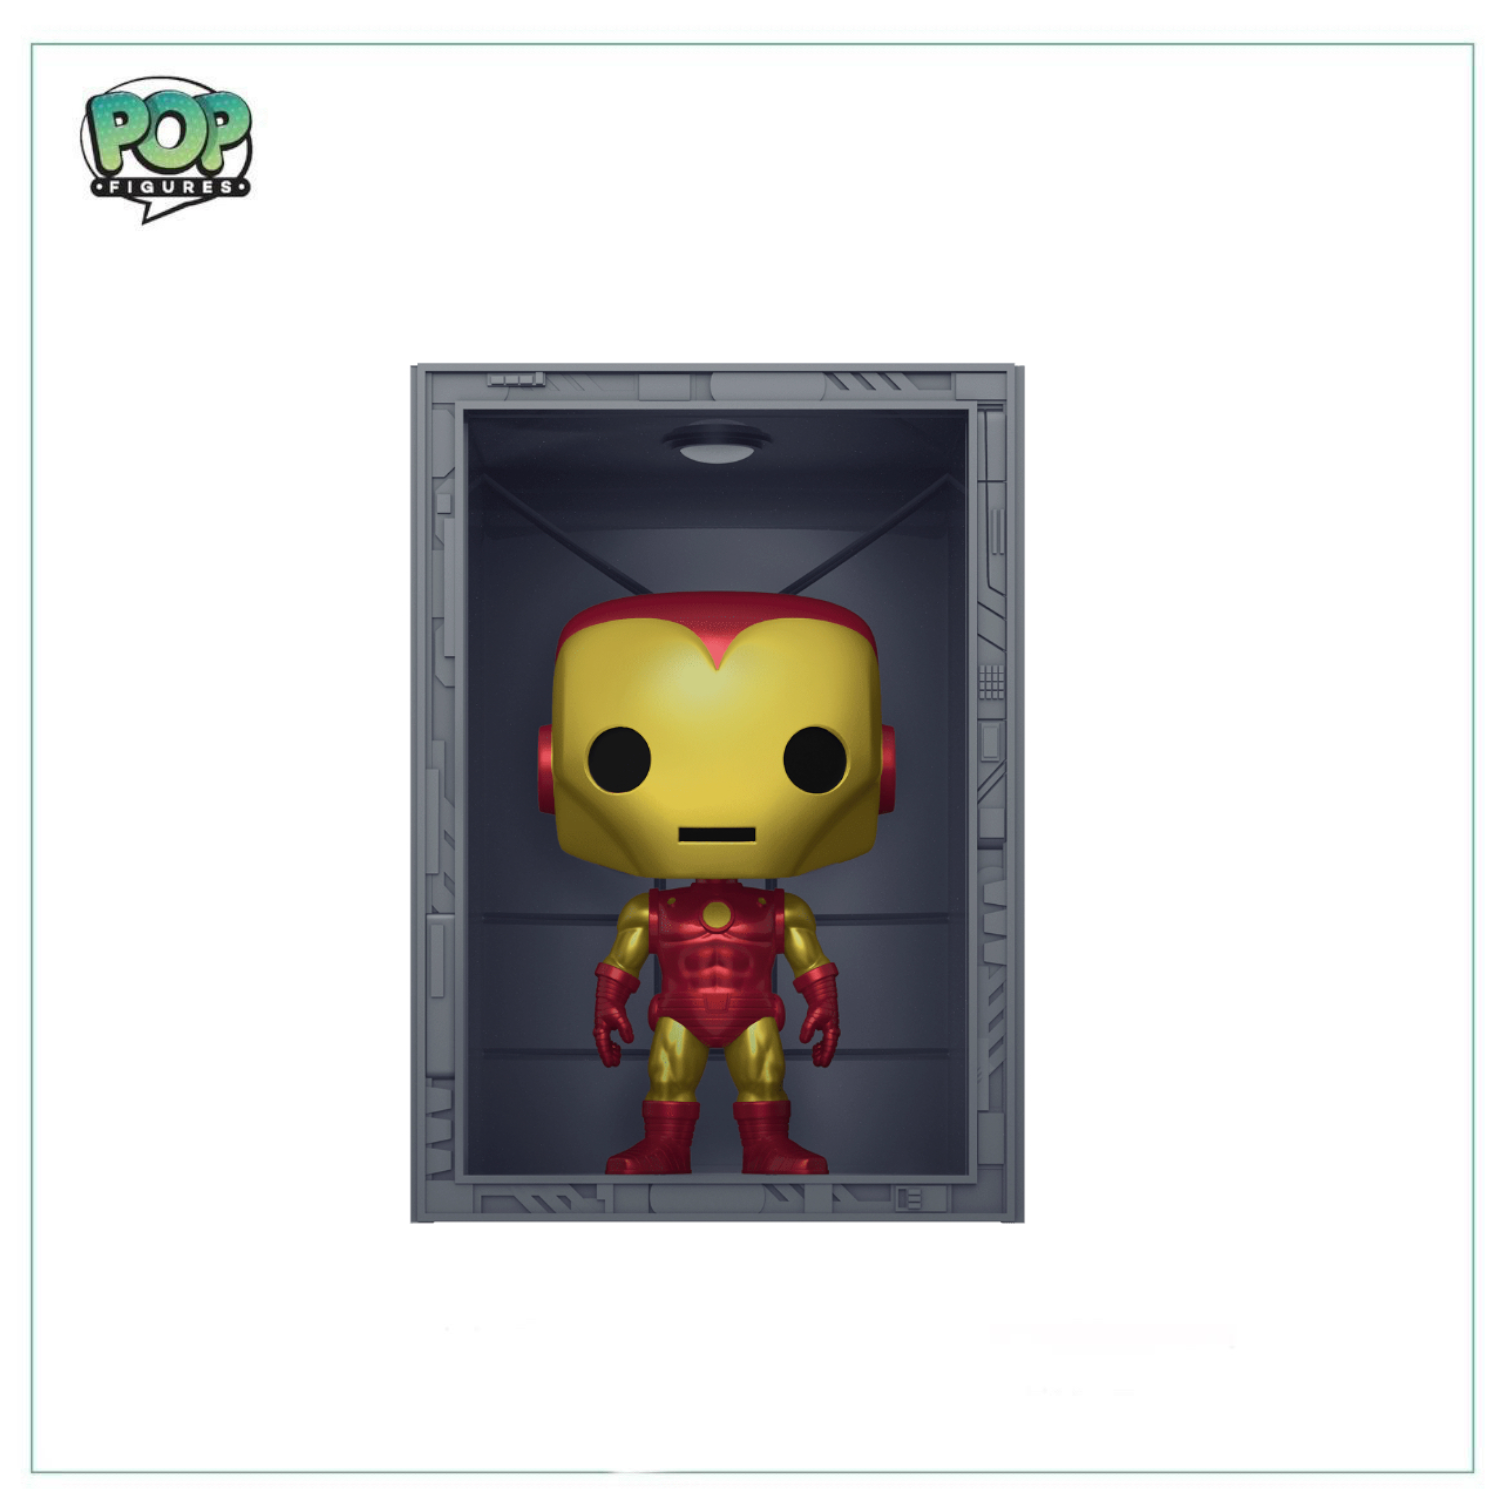 Funko Pop! Iron Man: Hall of Armor - Model 4 Metallic Deluxe #1036